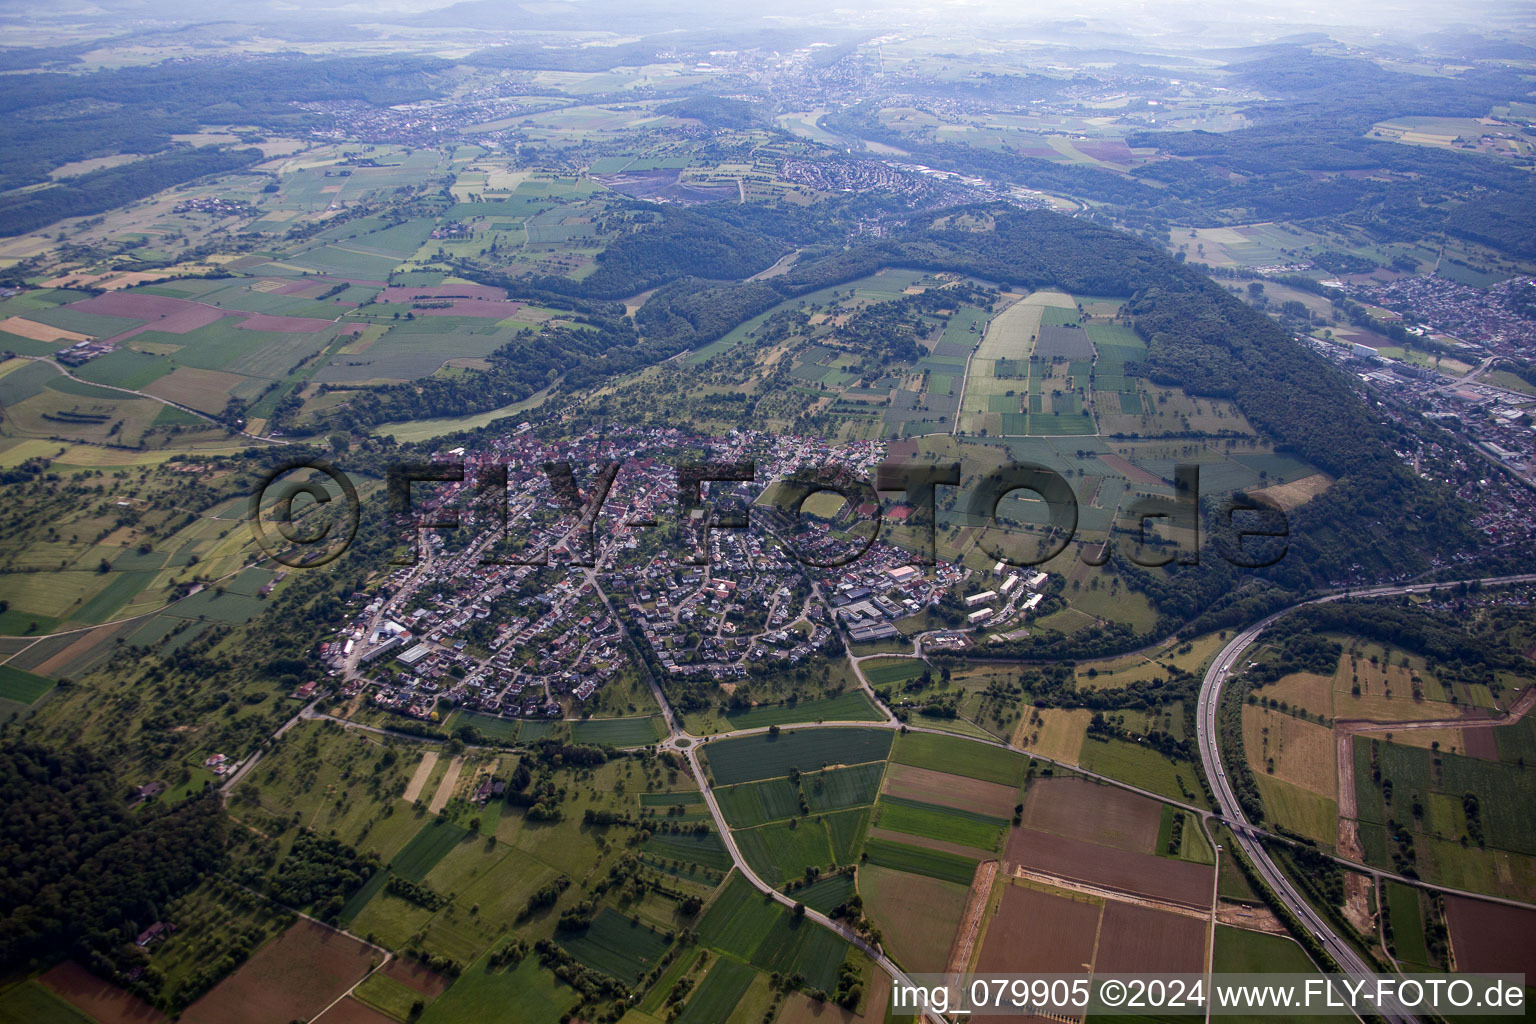 Aerial view of Kieselbronn in the state Baden-Wuerttemberg, Germany